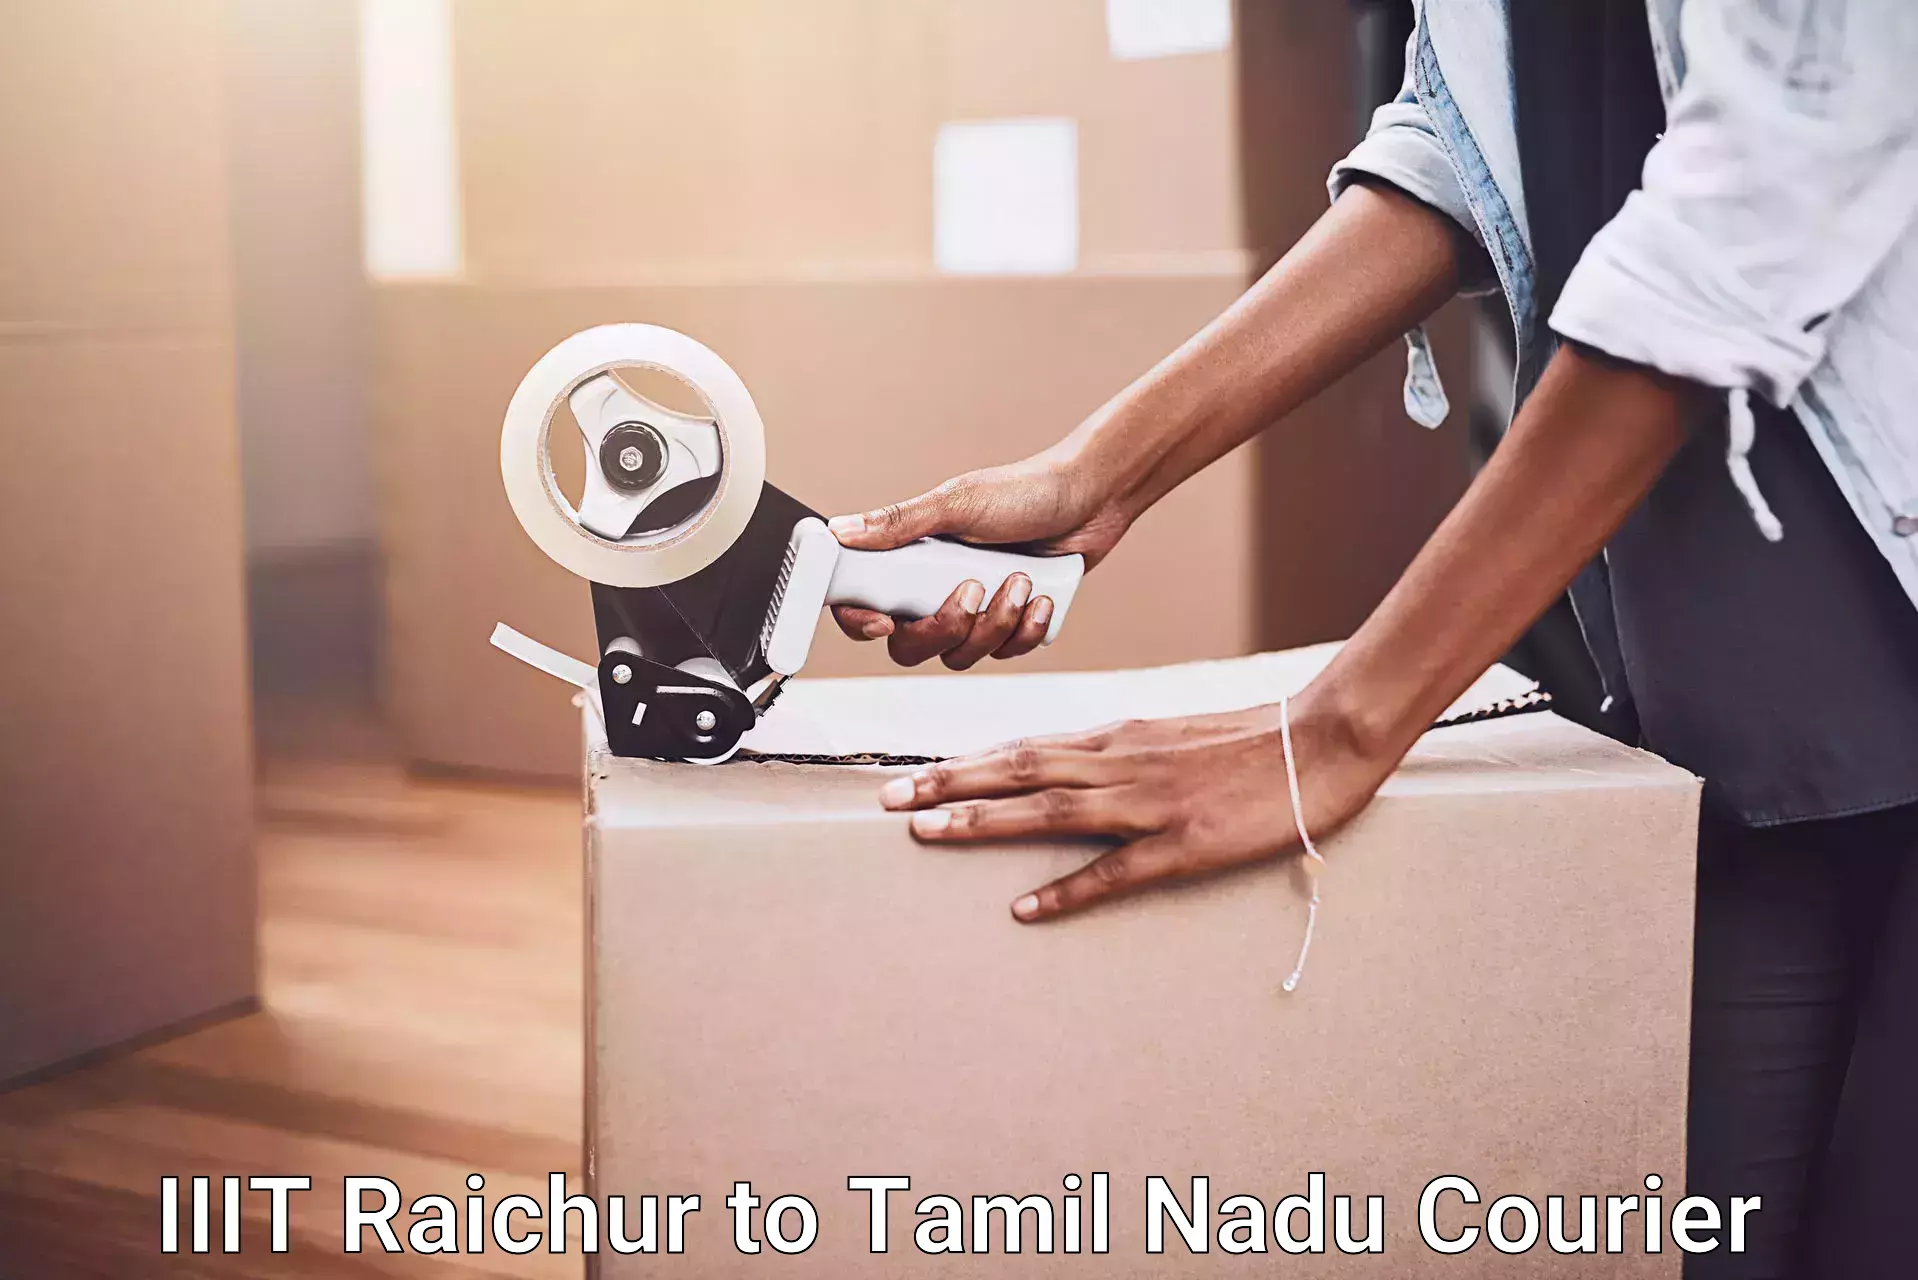 Moving service excellence IIIT Raichur to Tamil Nadu